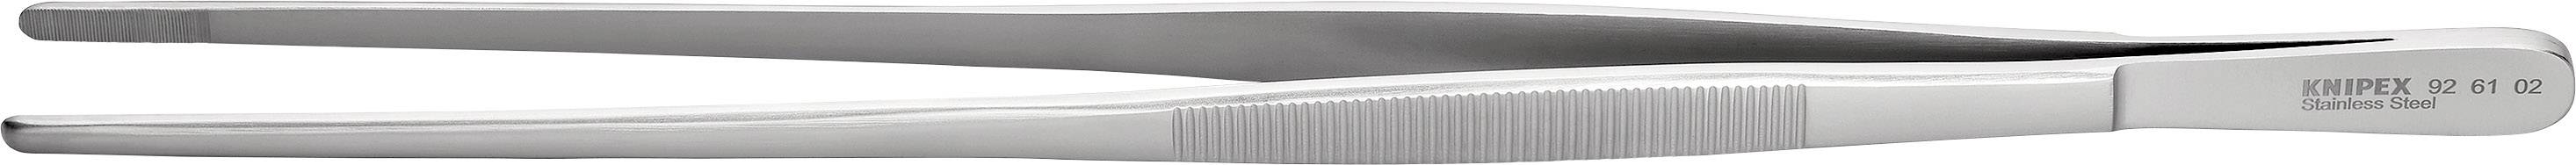 KNIPEX 92 61 02 Universalpinzette 1 Stück Stumpf 300 mm